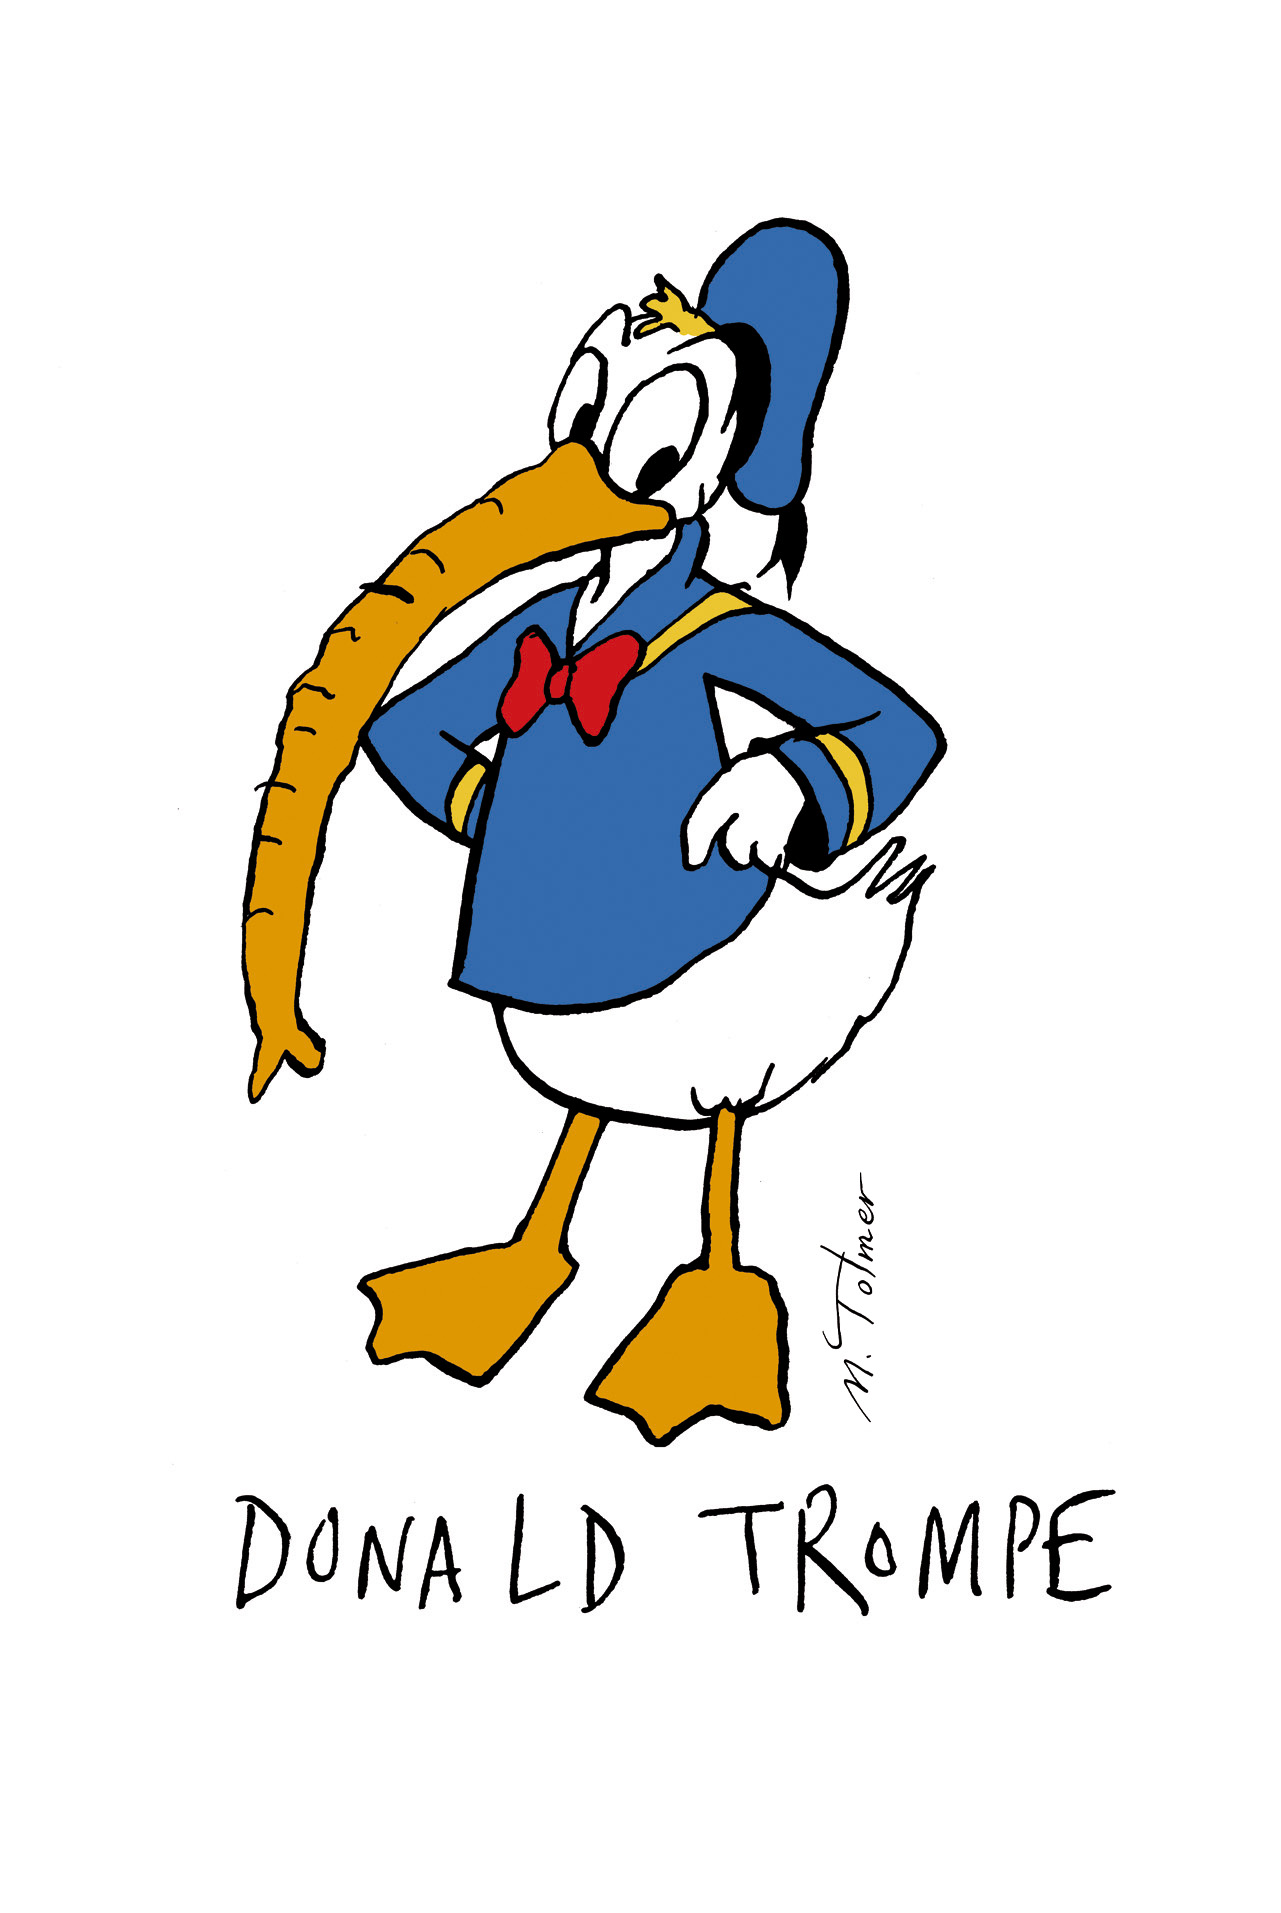 http://www.glougueule.fr/wp-content/uploads/2015/10/Donald-Trompe.jpg